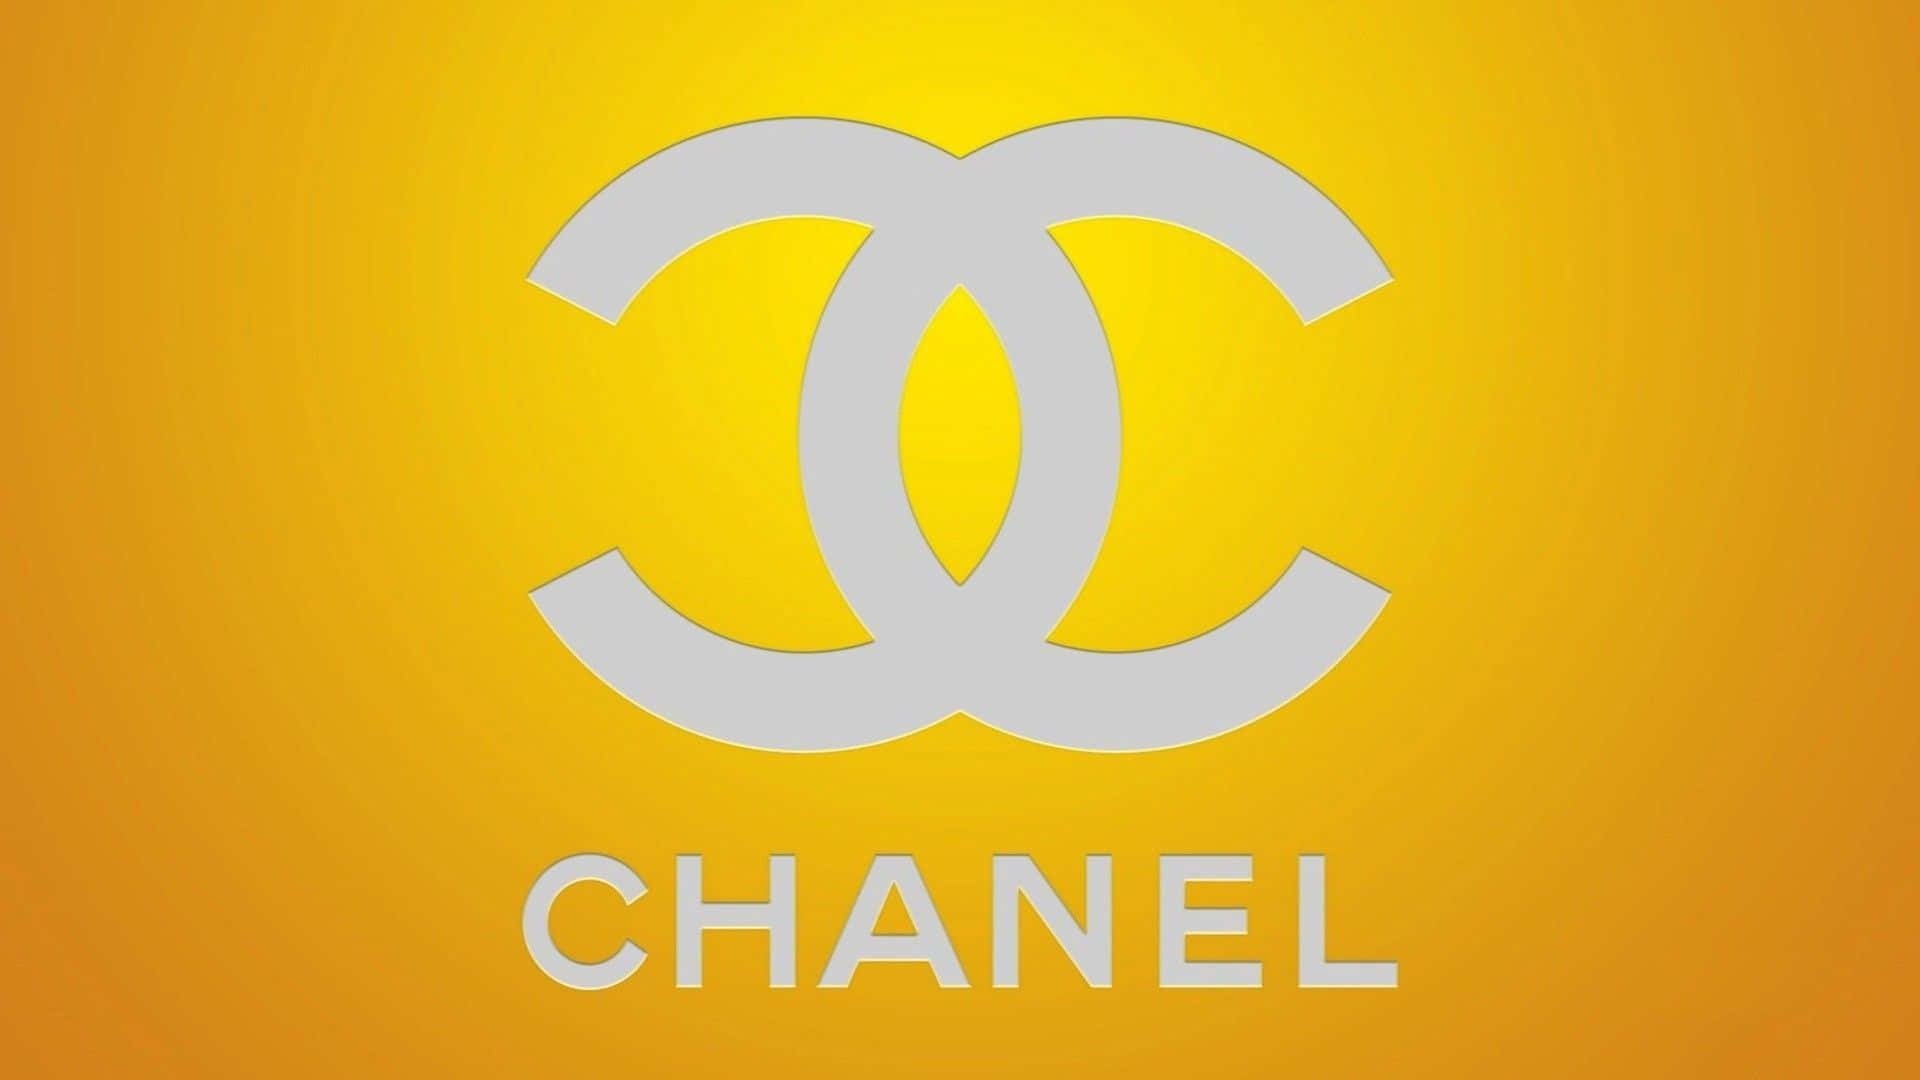 Chanellogotyp På En Orange Bakgrund